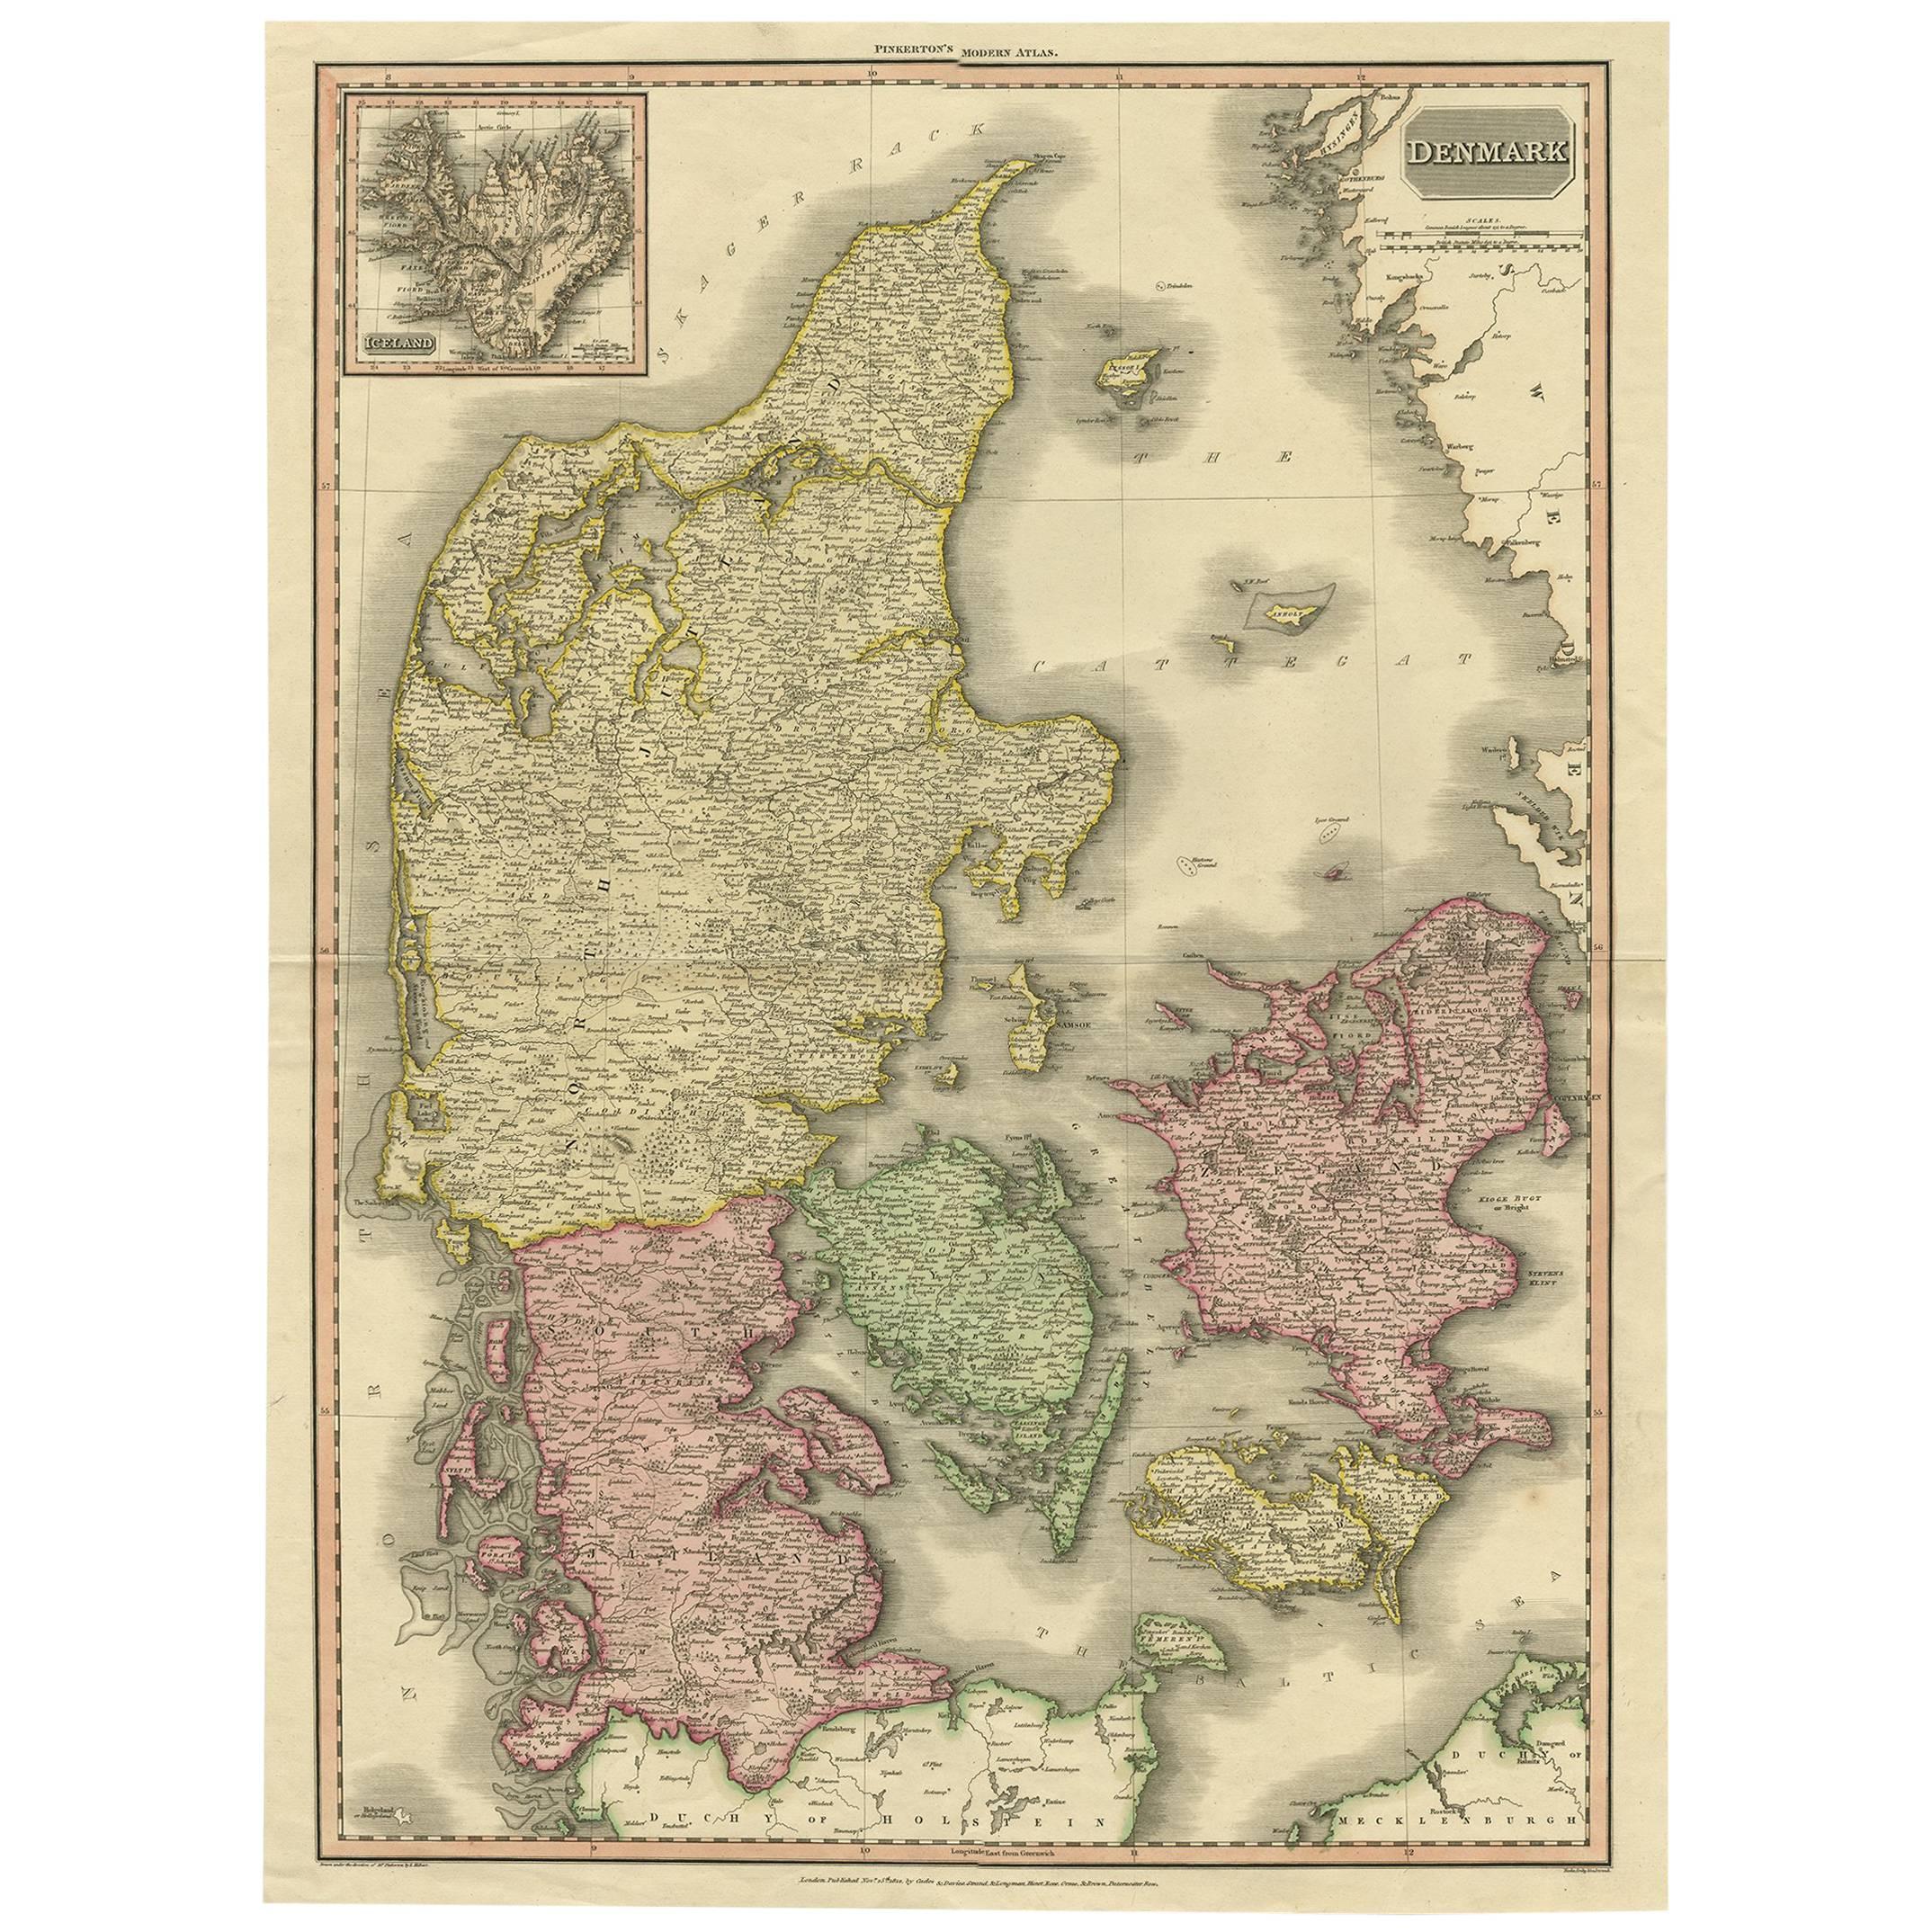 19th Century Large Original Antique Map of Denmark by J. Pinkerton, 1812